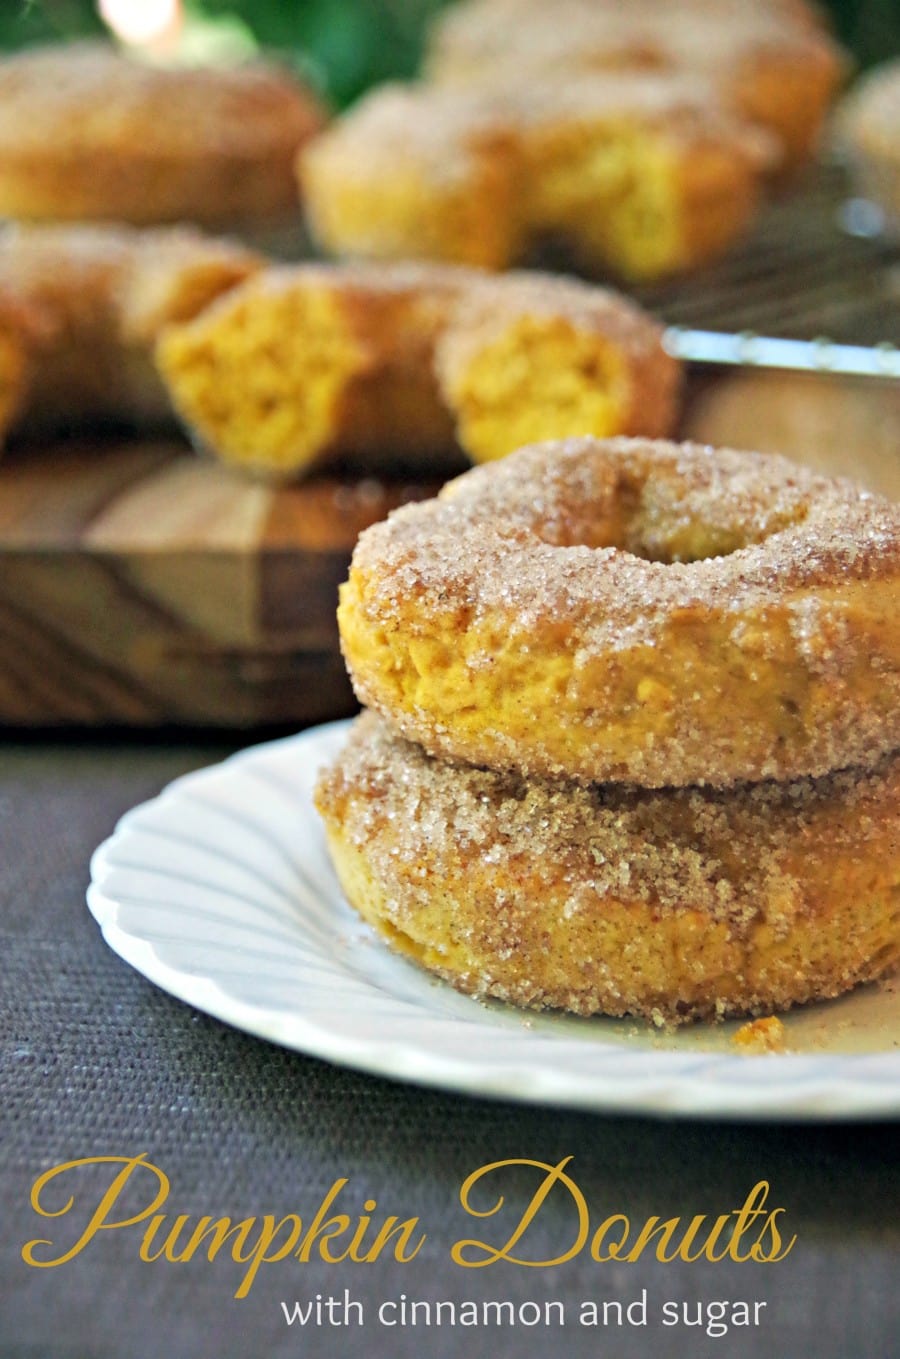 Pumpkin Donuts with Cinnamon and Sugar